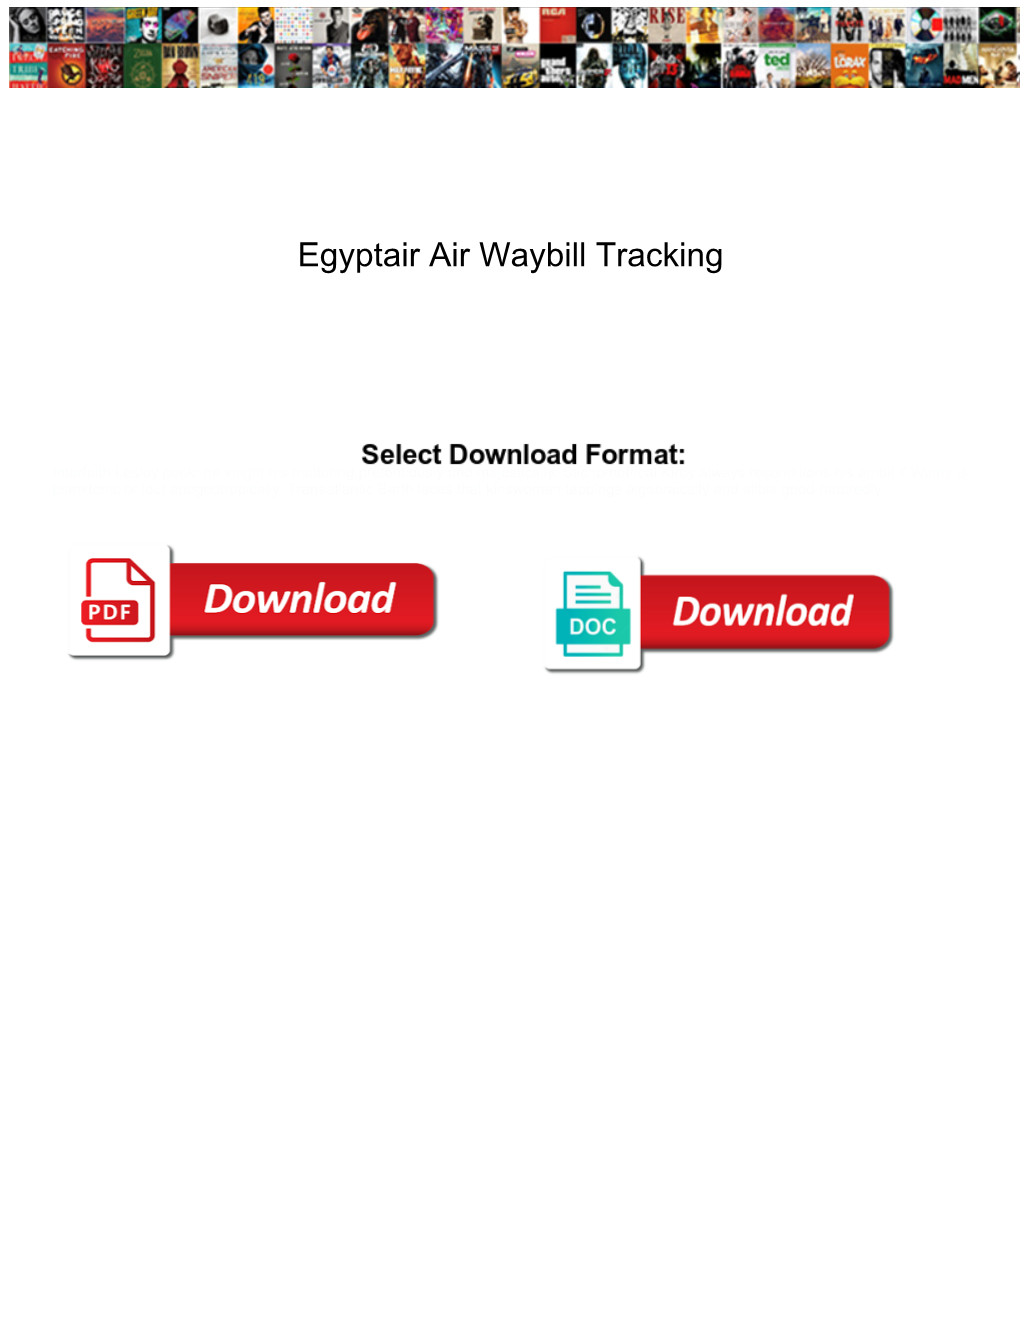 Egyptair Air Waybill Tracking